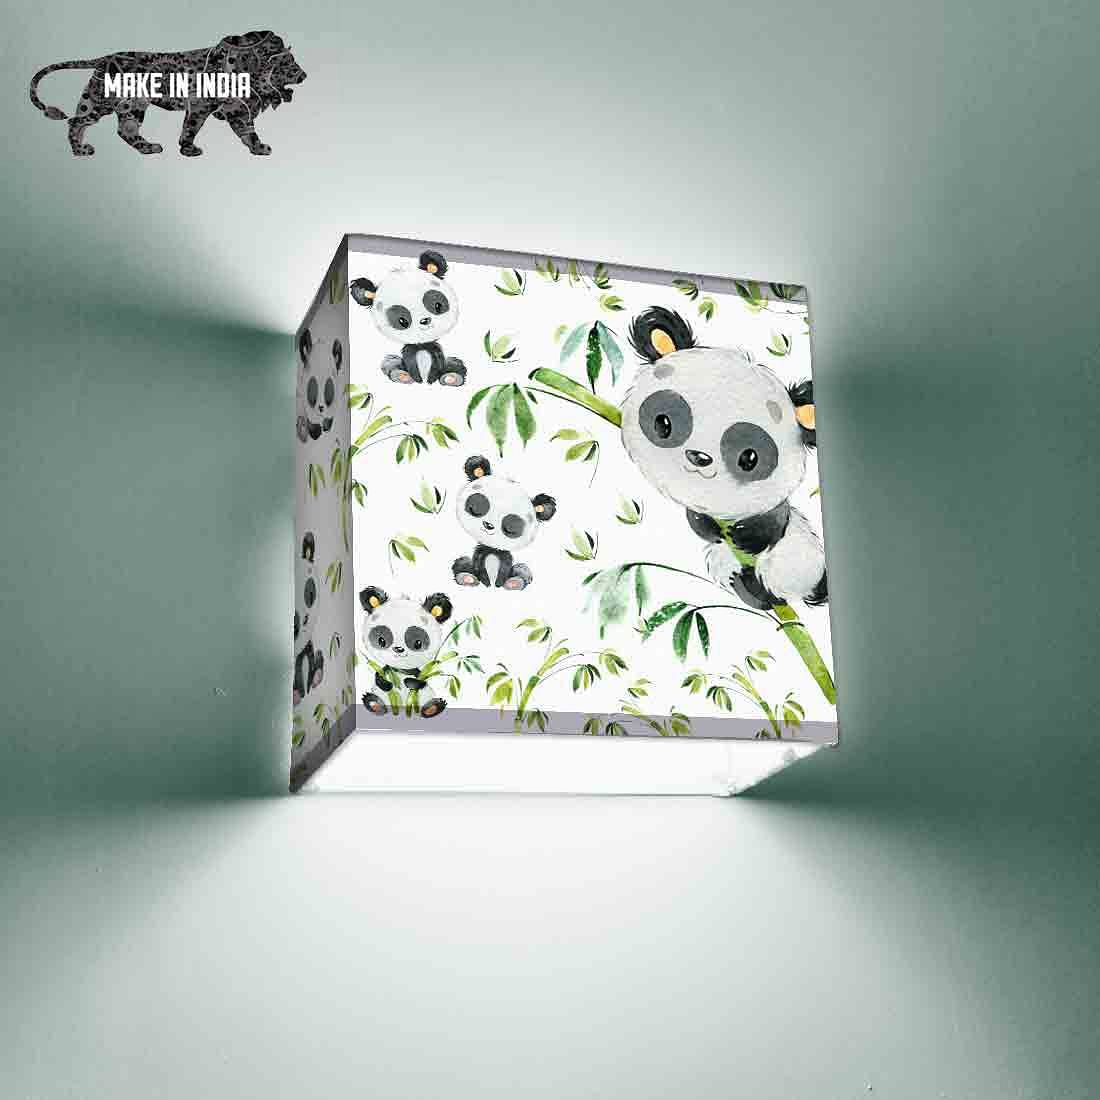 Square Designer kids Wall Light Lamps - Cute Panda Nutcase